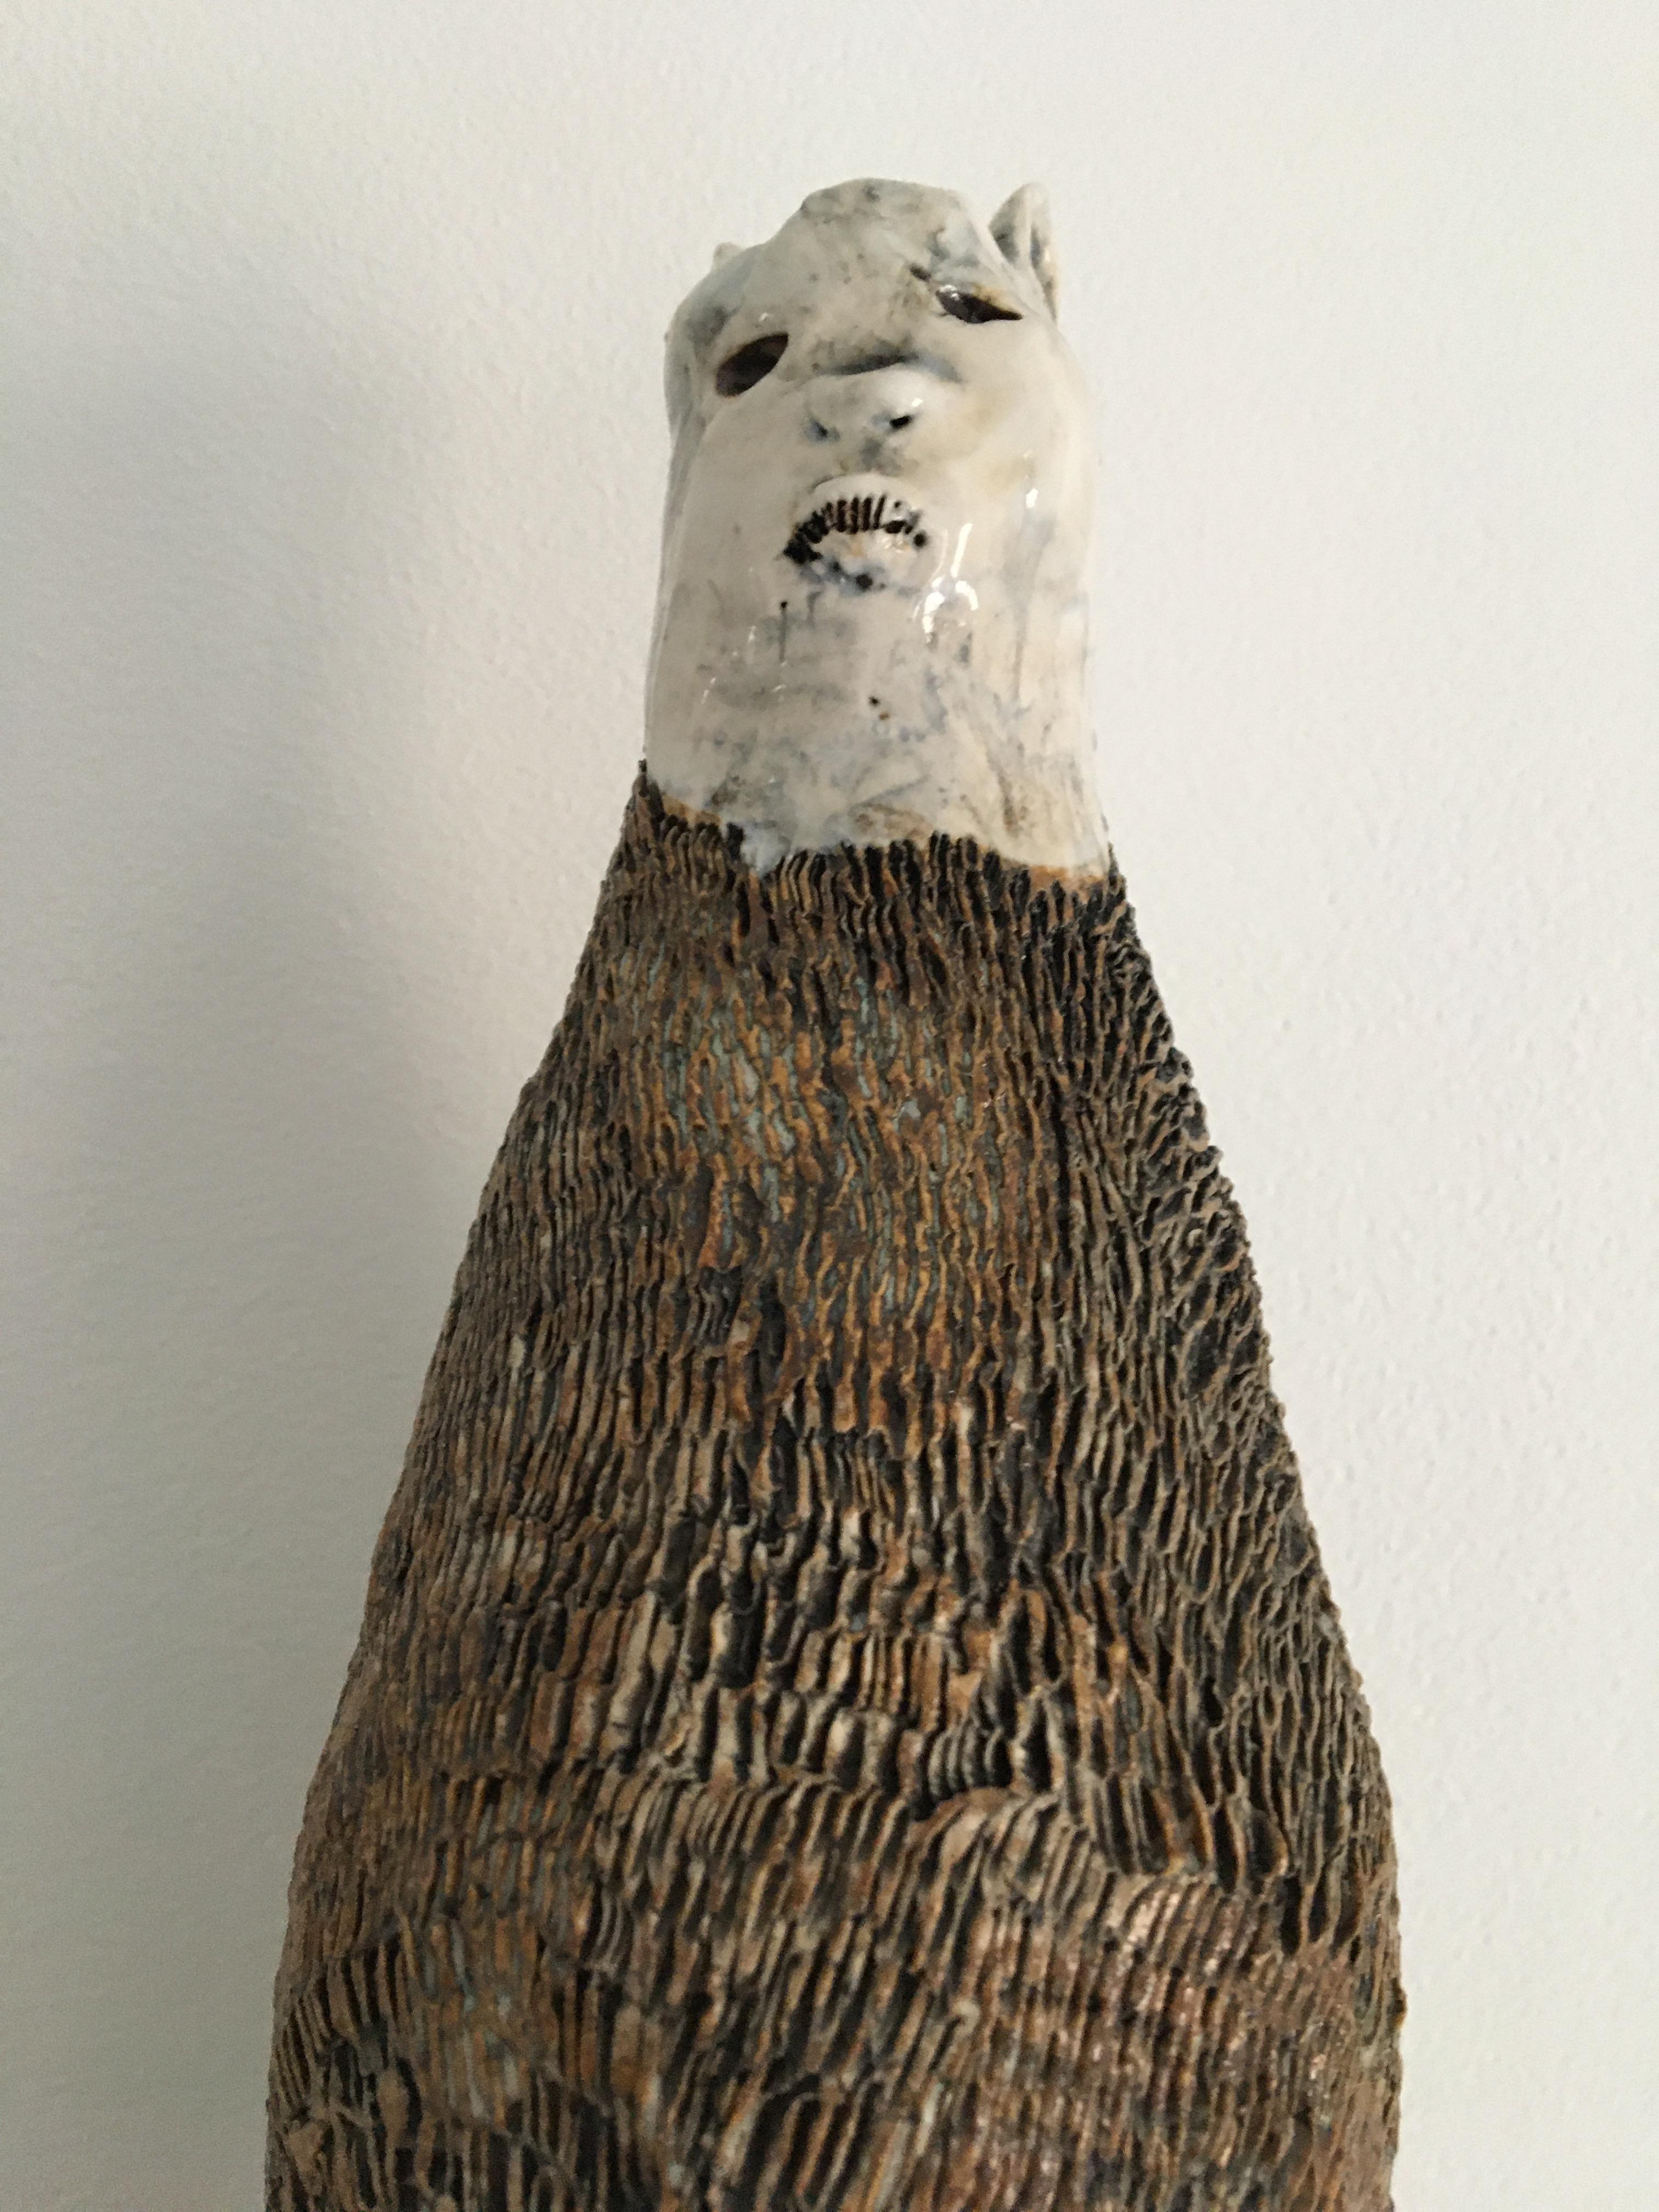 Ceramic woman on wood block: 'My lower self ain’t pretty' - Gray Figurative Sculpture by Ashley Benton